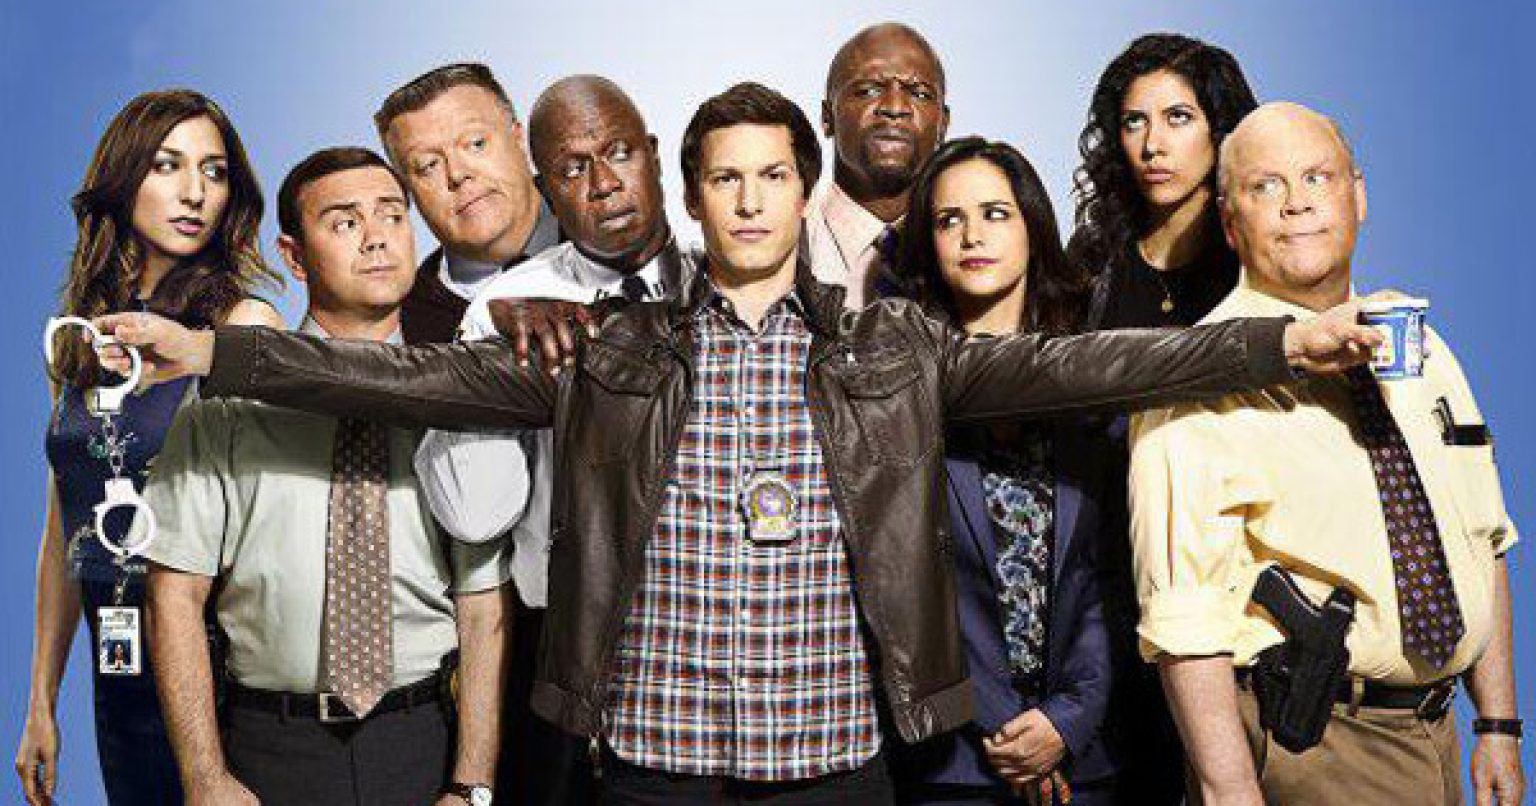 Brooklyn Nine-Nine Season 8 on Netflix - Watch All Seasons of B99 Easily